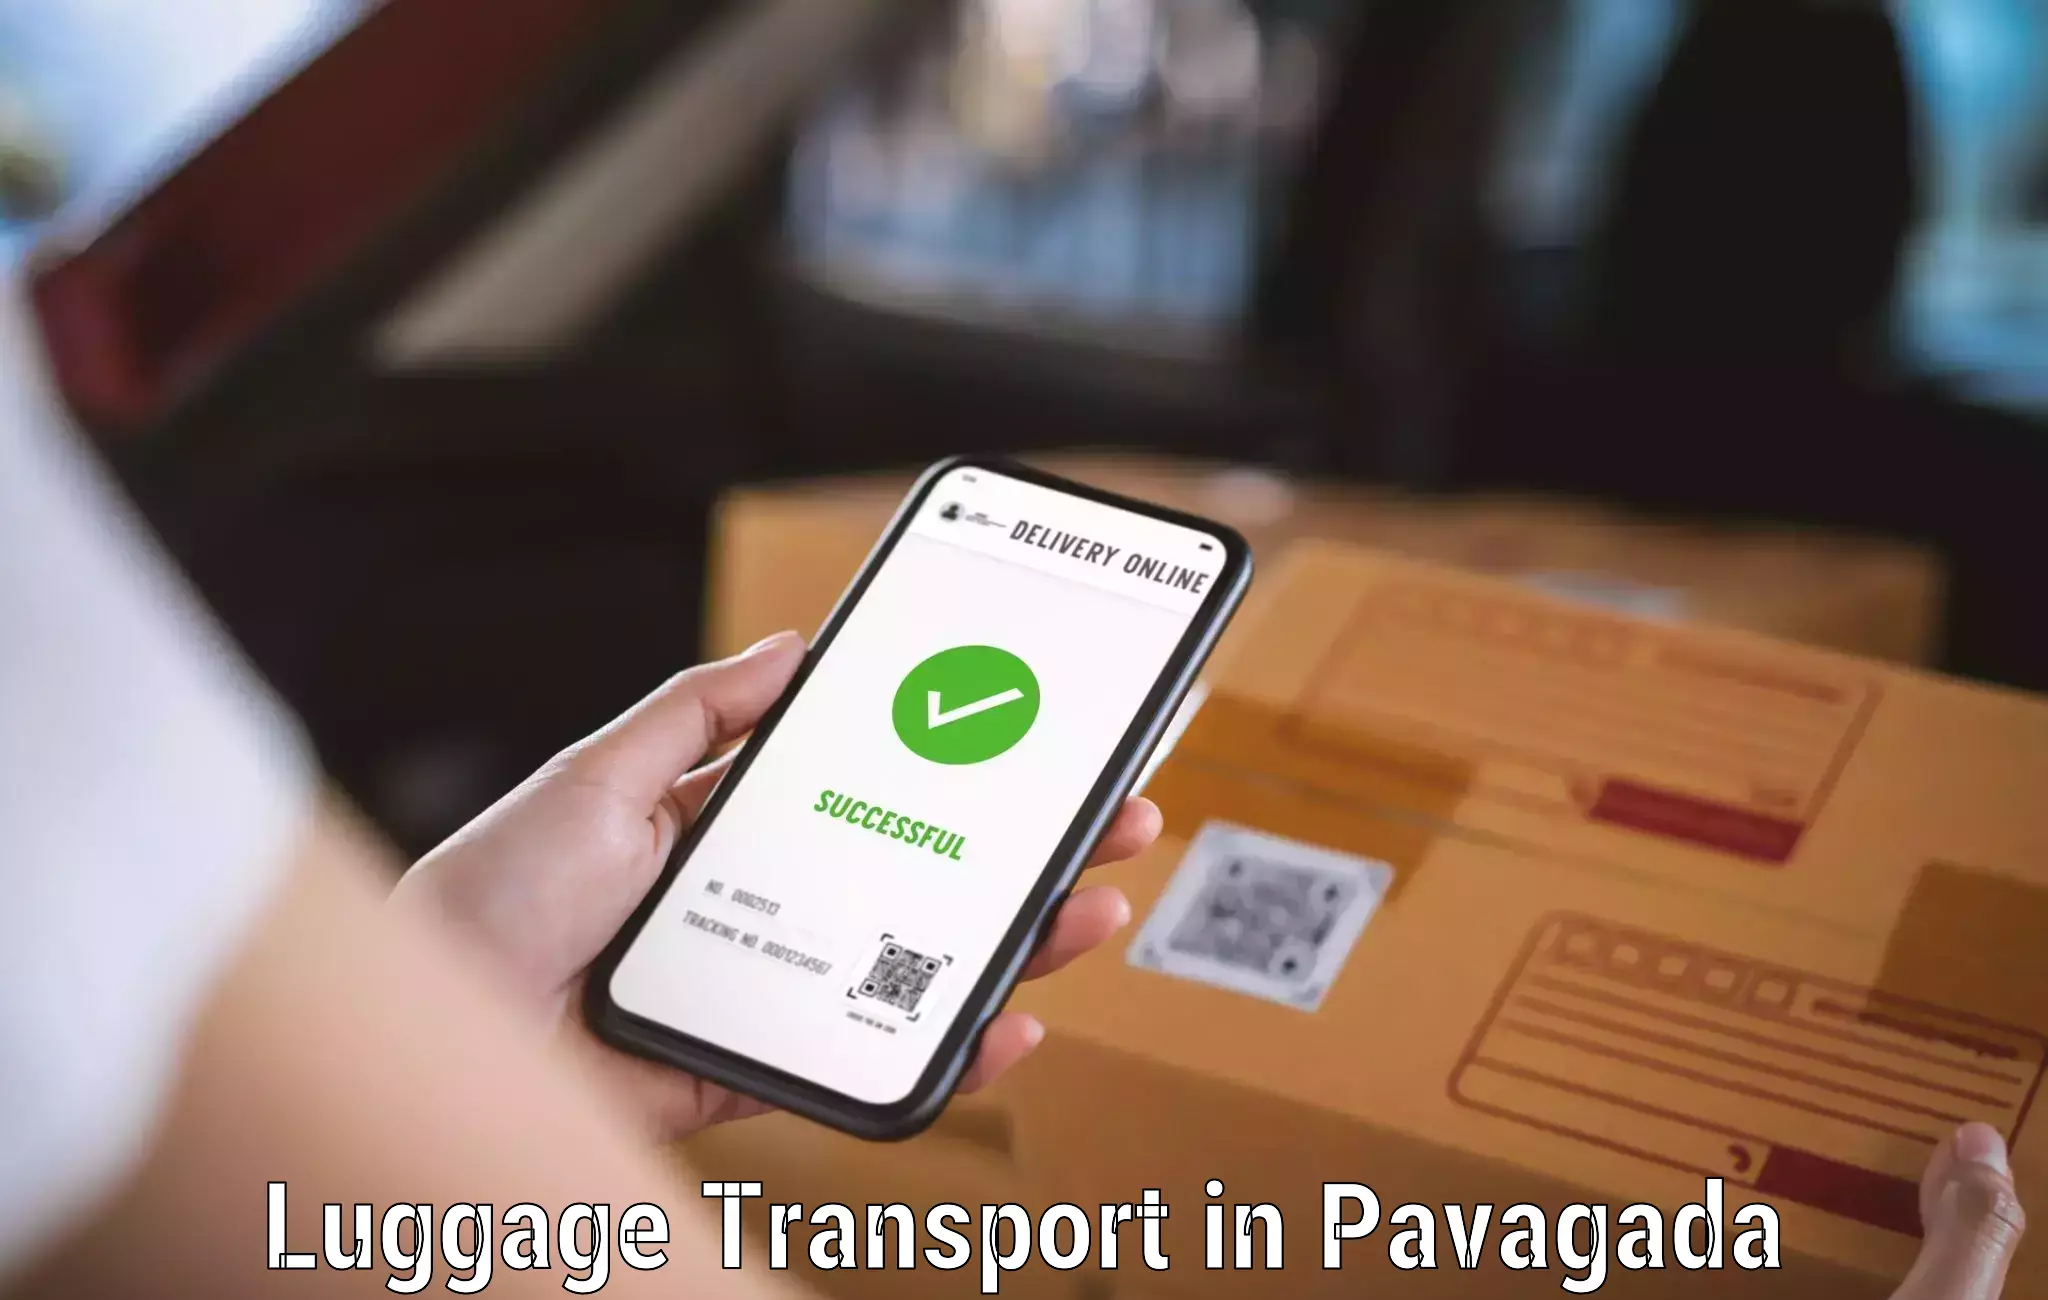 Professional baggage transport in Pavagada